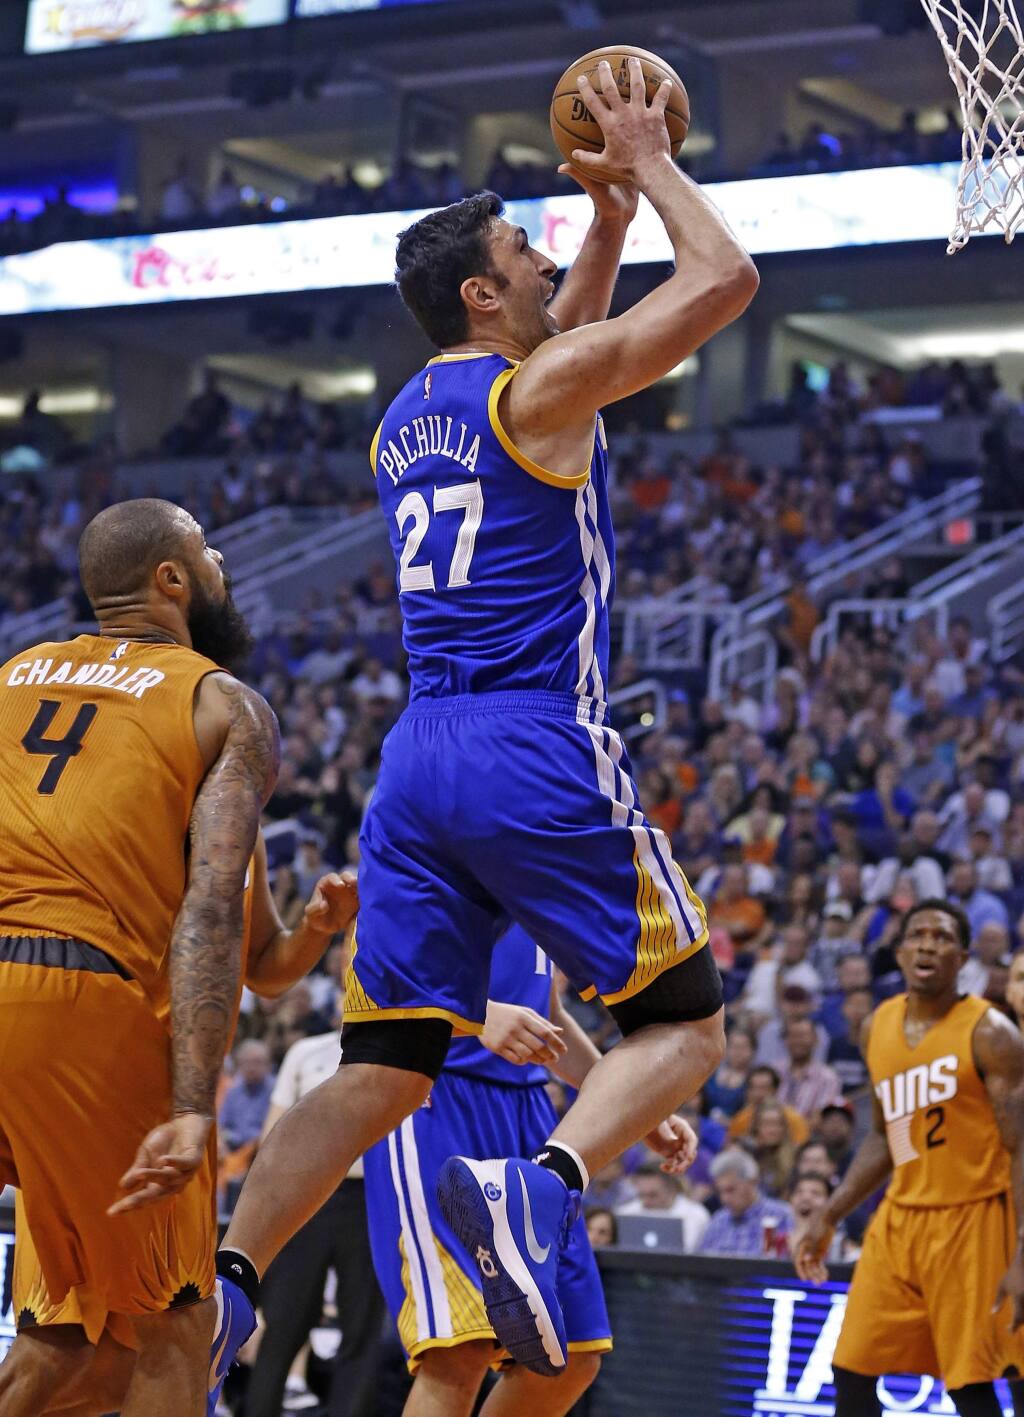 Nervous' Kevin Durant scores 23 in winning Phoenix Suns debut